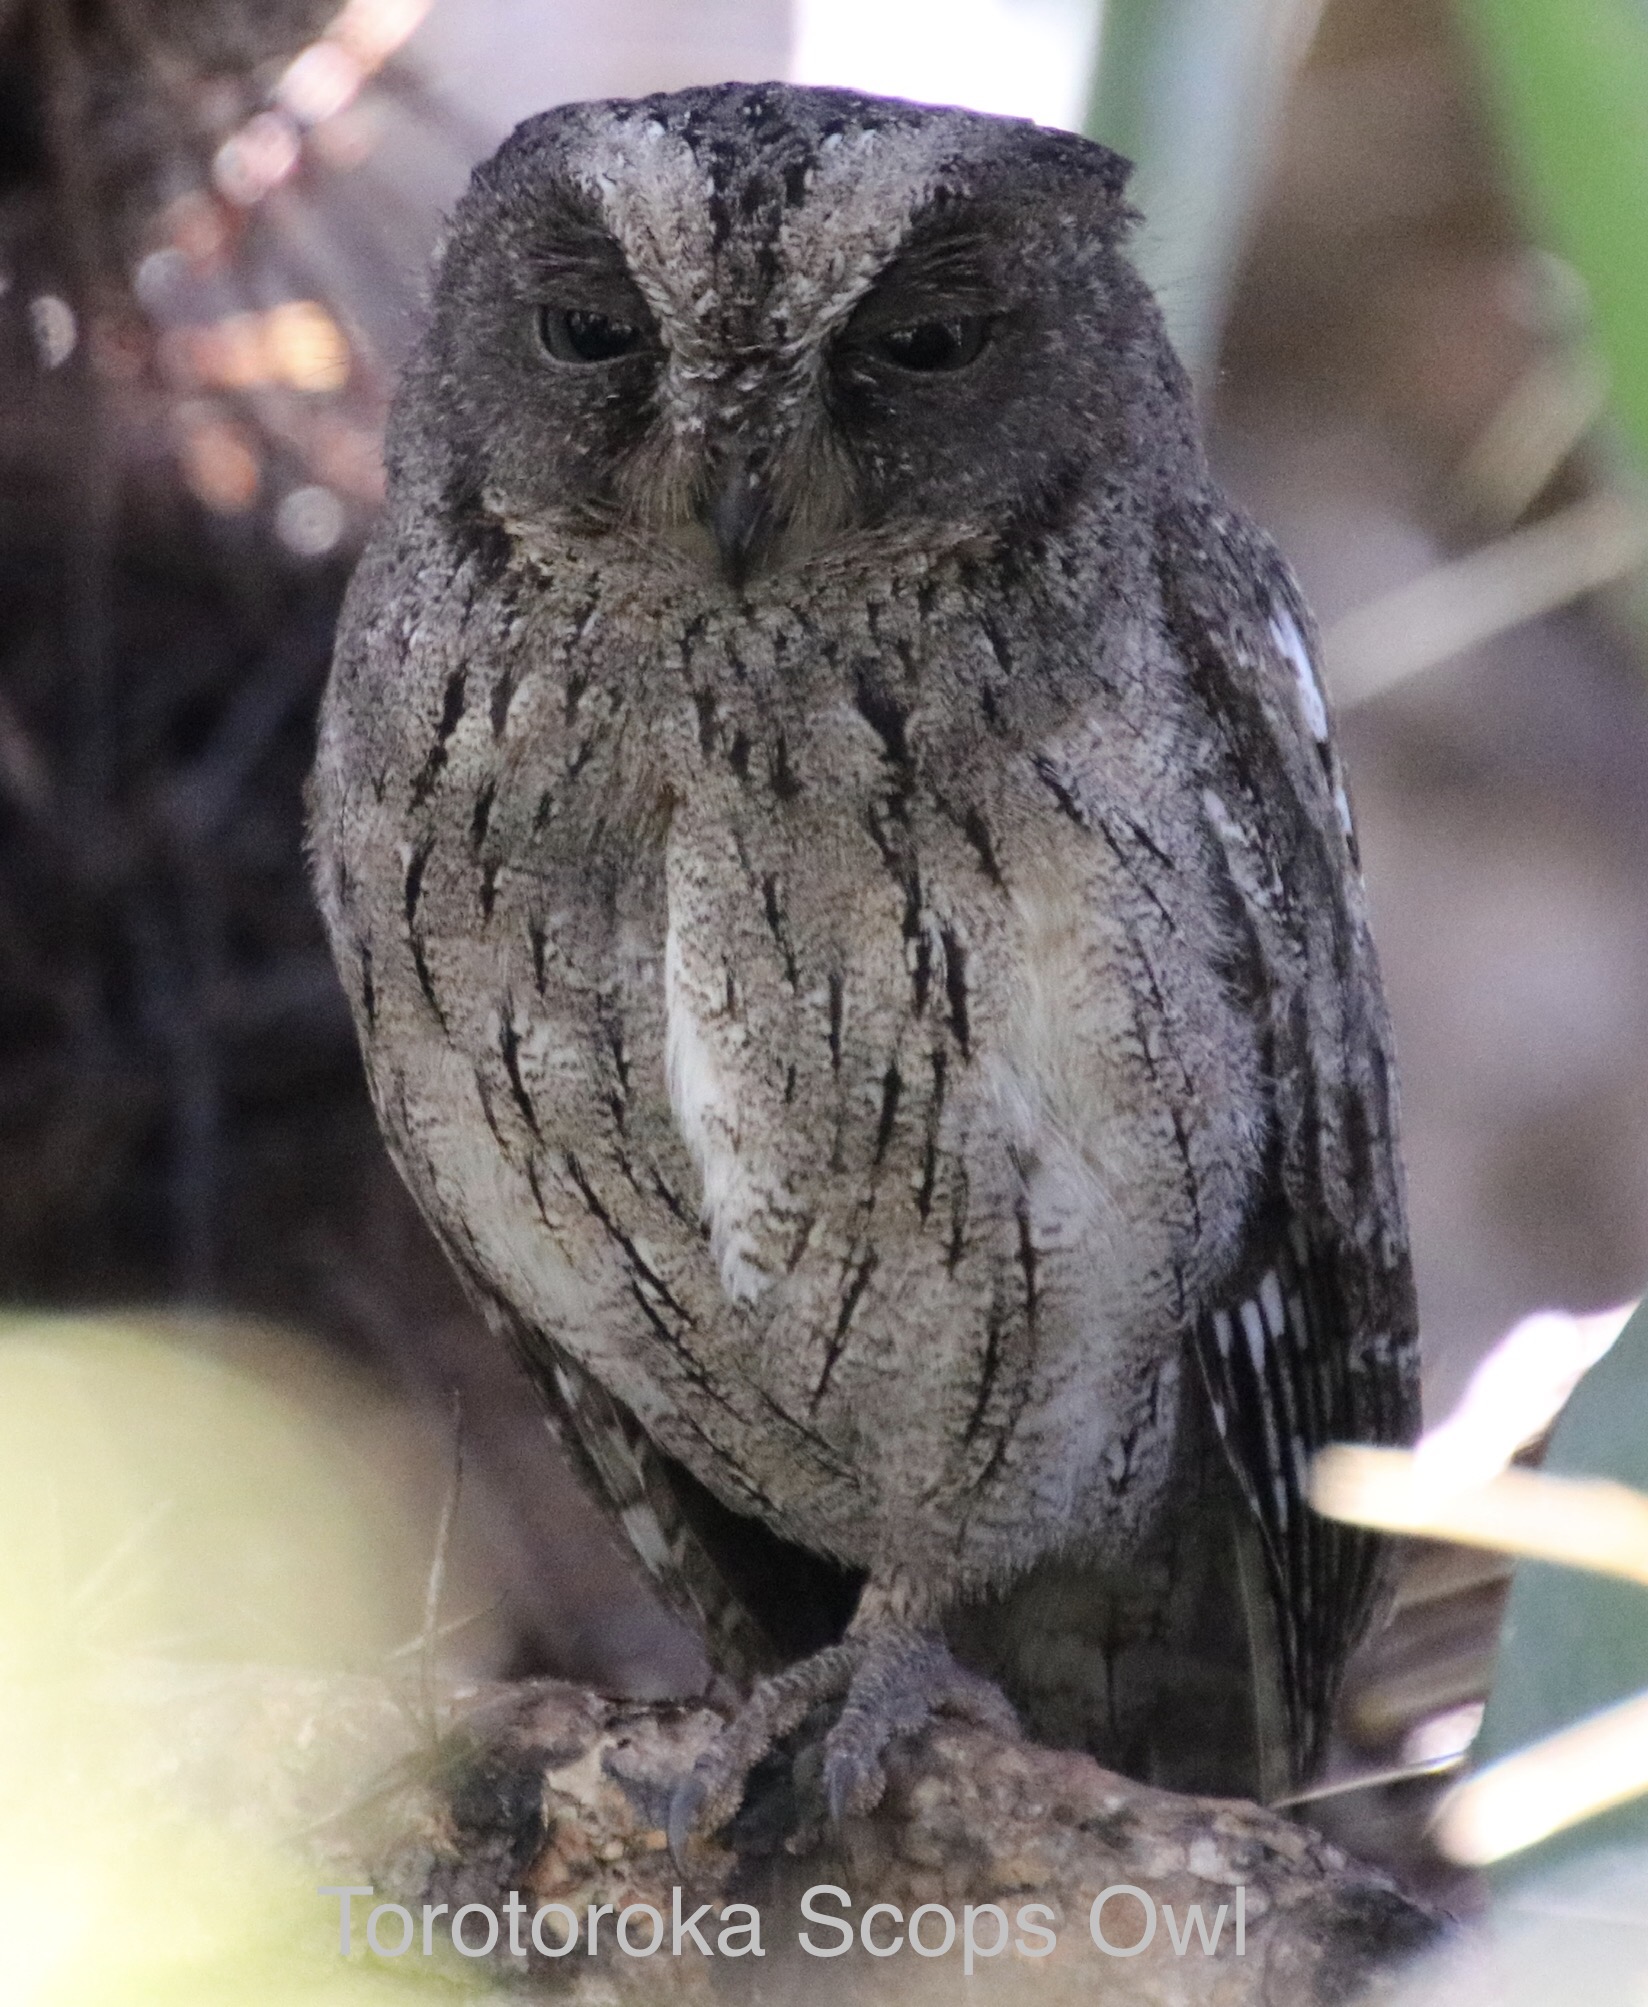 Torotoroka Scops Owl, Madagascar. Photo by George Reich